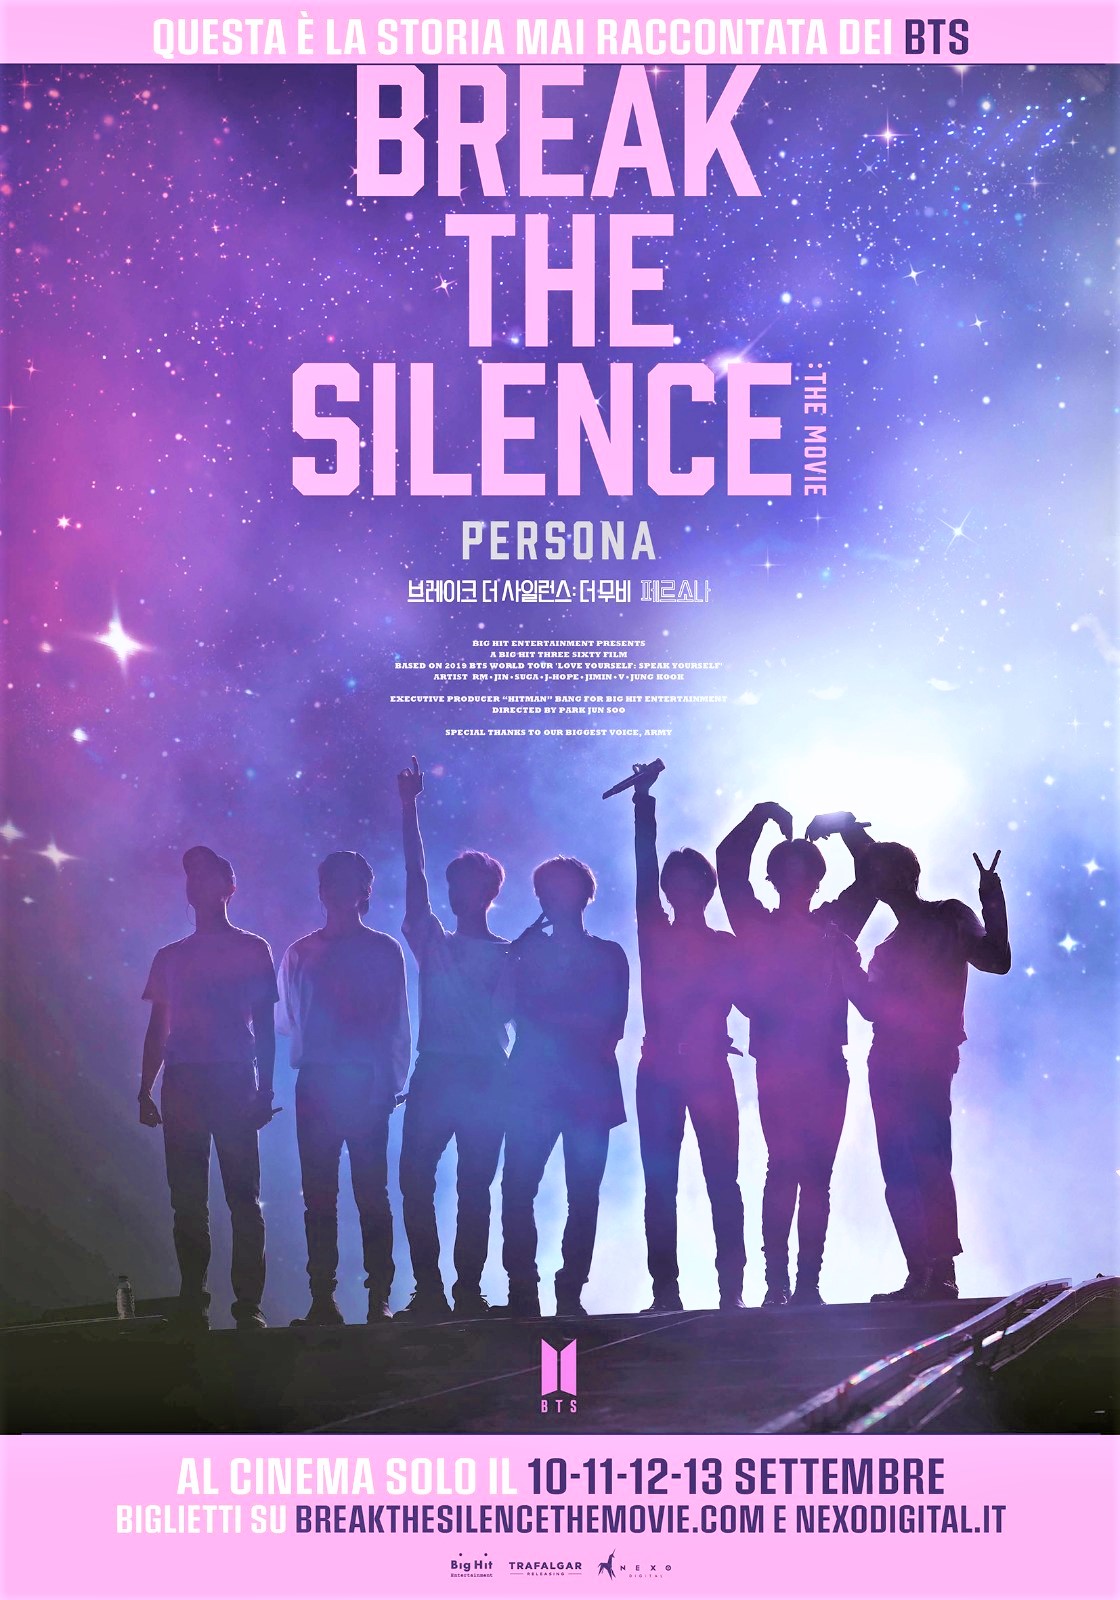 Nuovo film dei BTS Break the silence: the movie